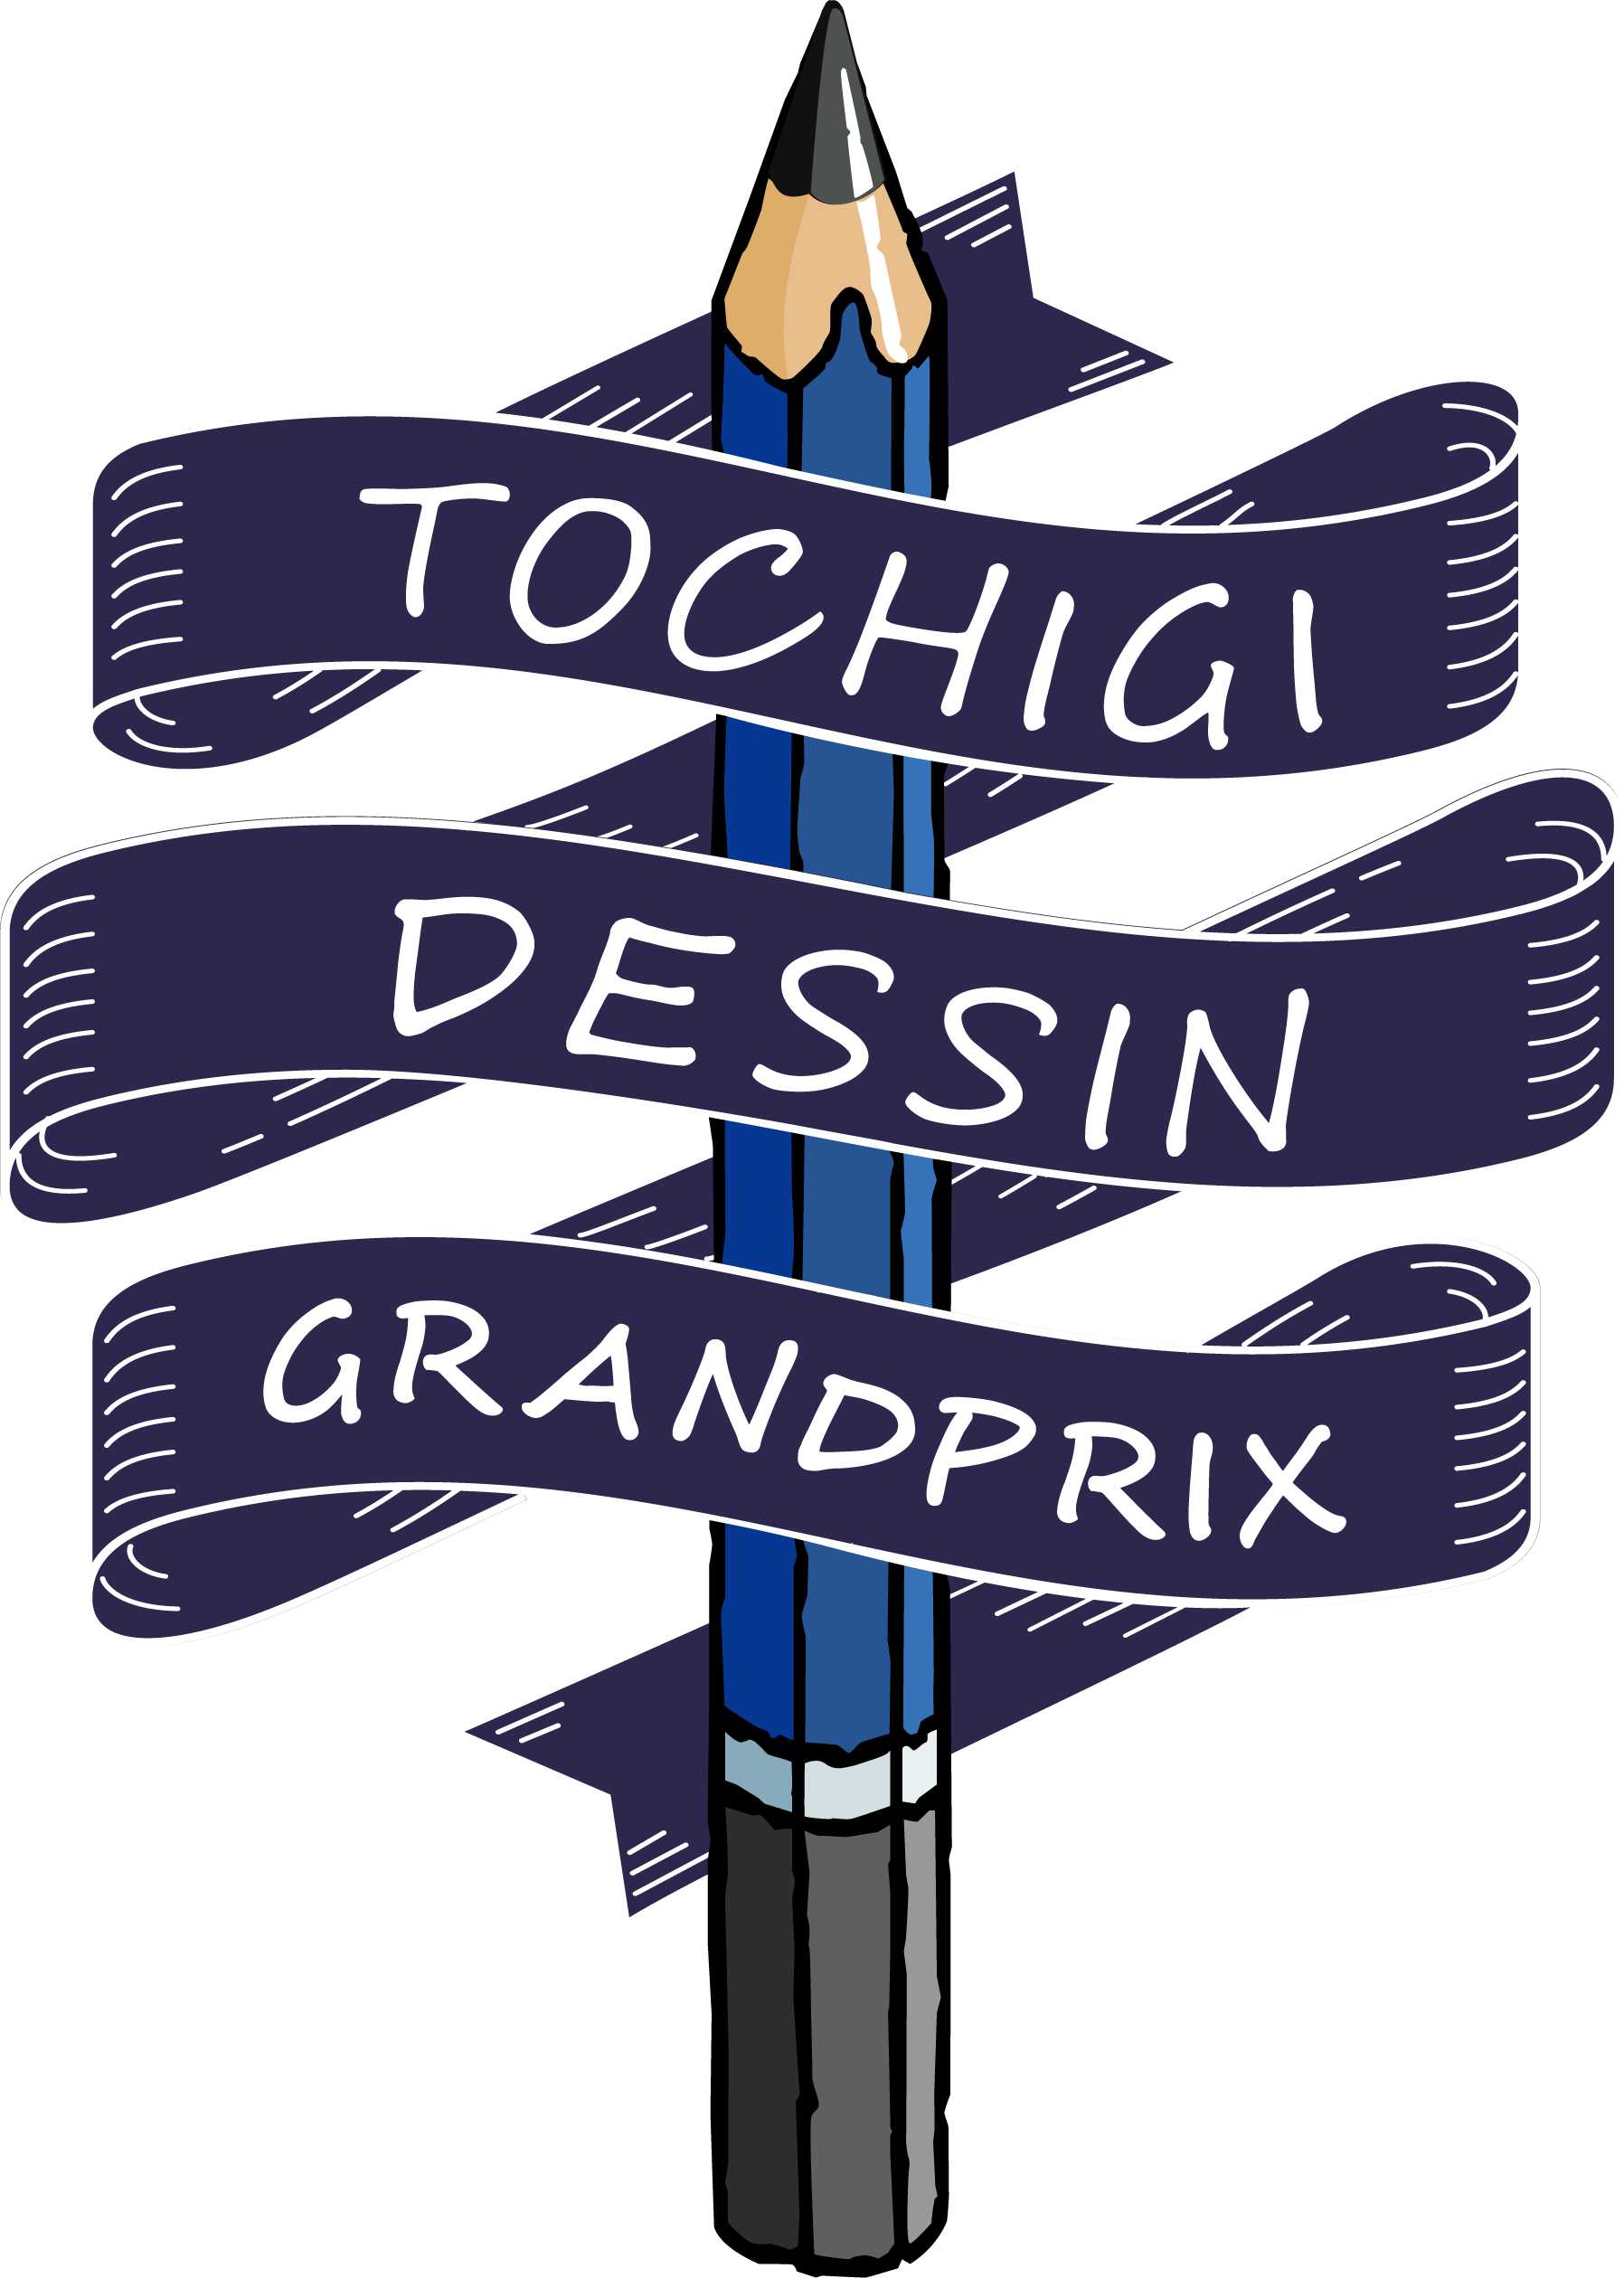 TOCHIGI DESSIN GRANDPRIX